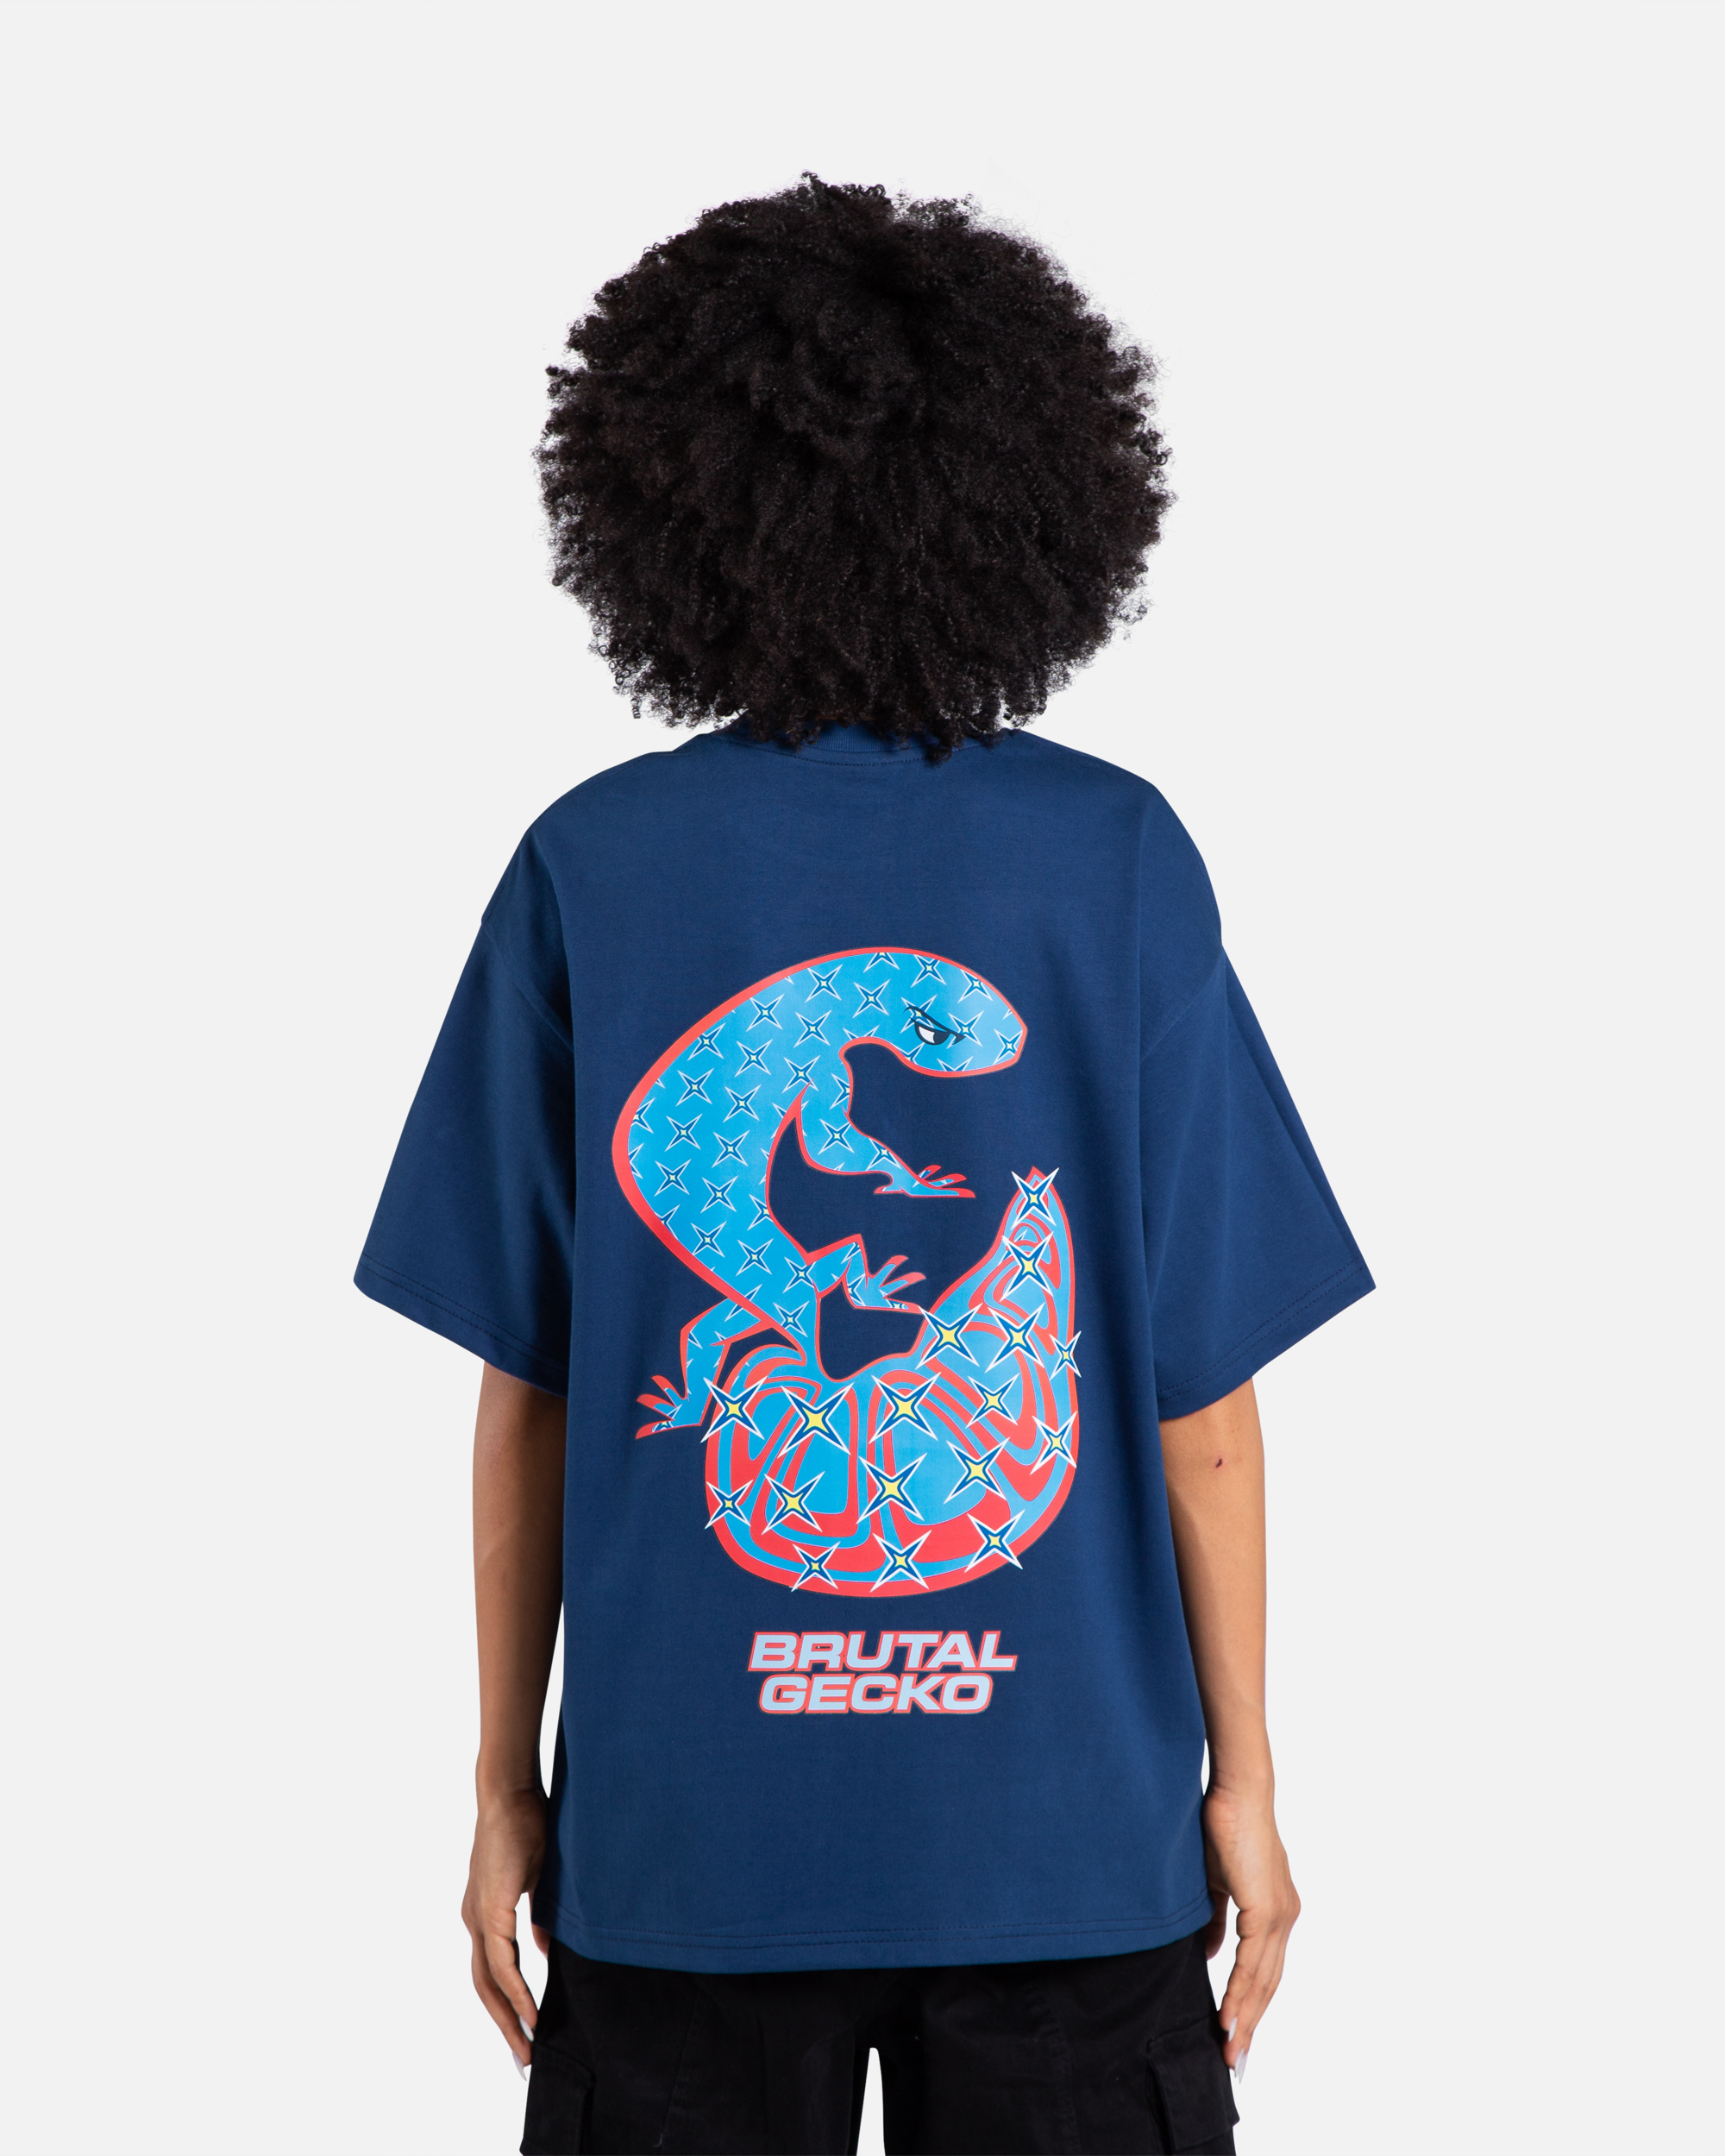 Brutal Gecko - Star Born Navy T-shirt